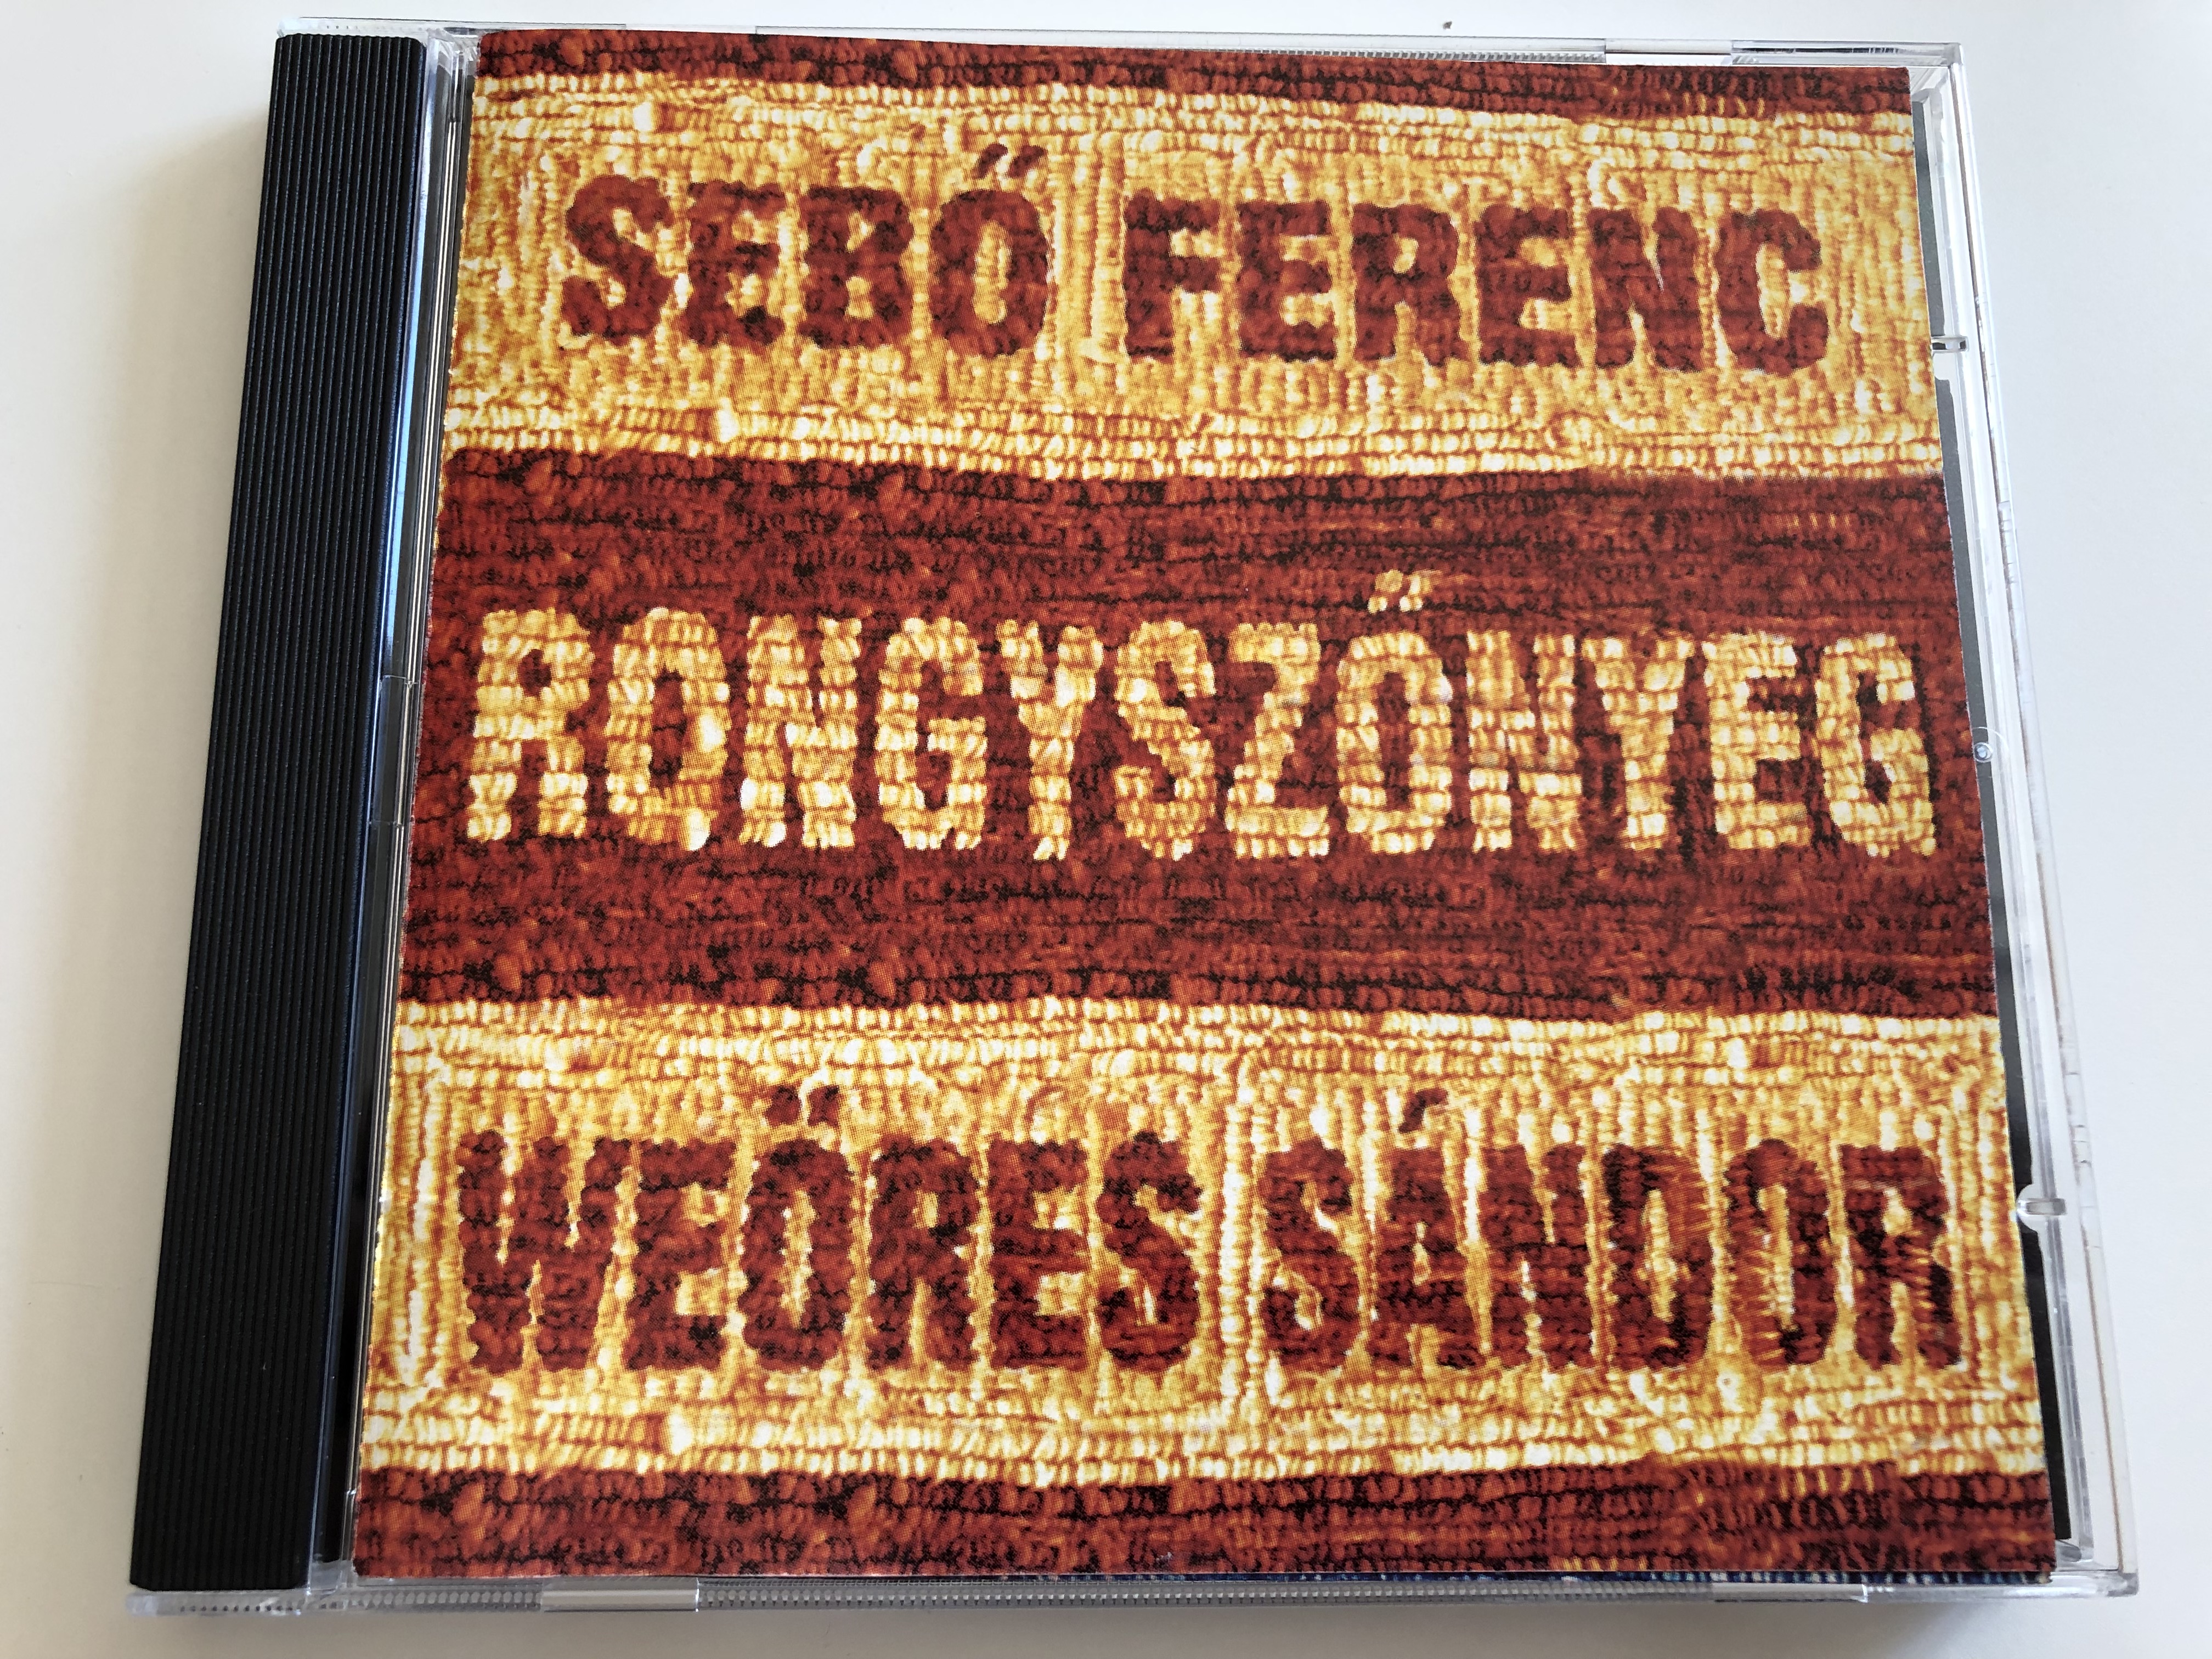 seb-ferenc-we-res-s-ndor-rongysz-nyeg-gryllus-audio-cd-1997-gcd-006-1-.jpg